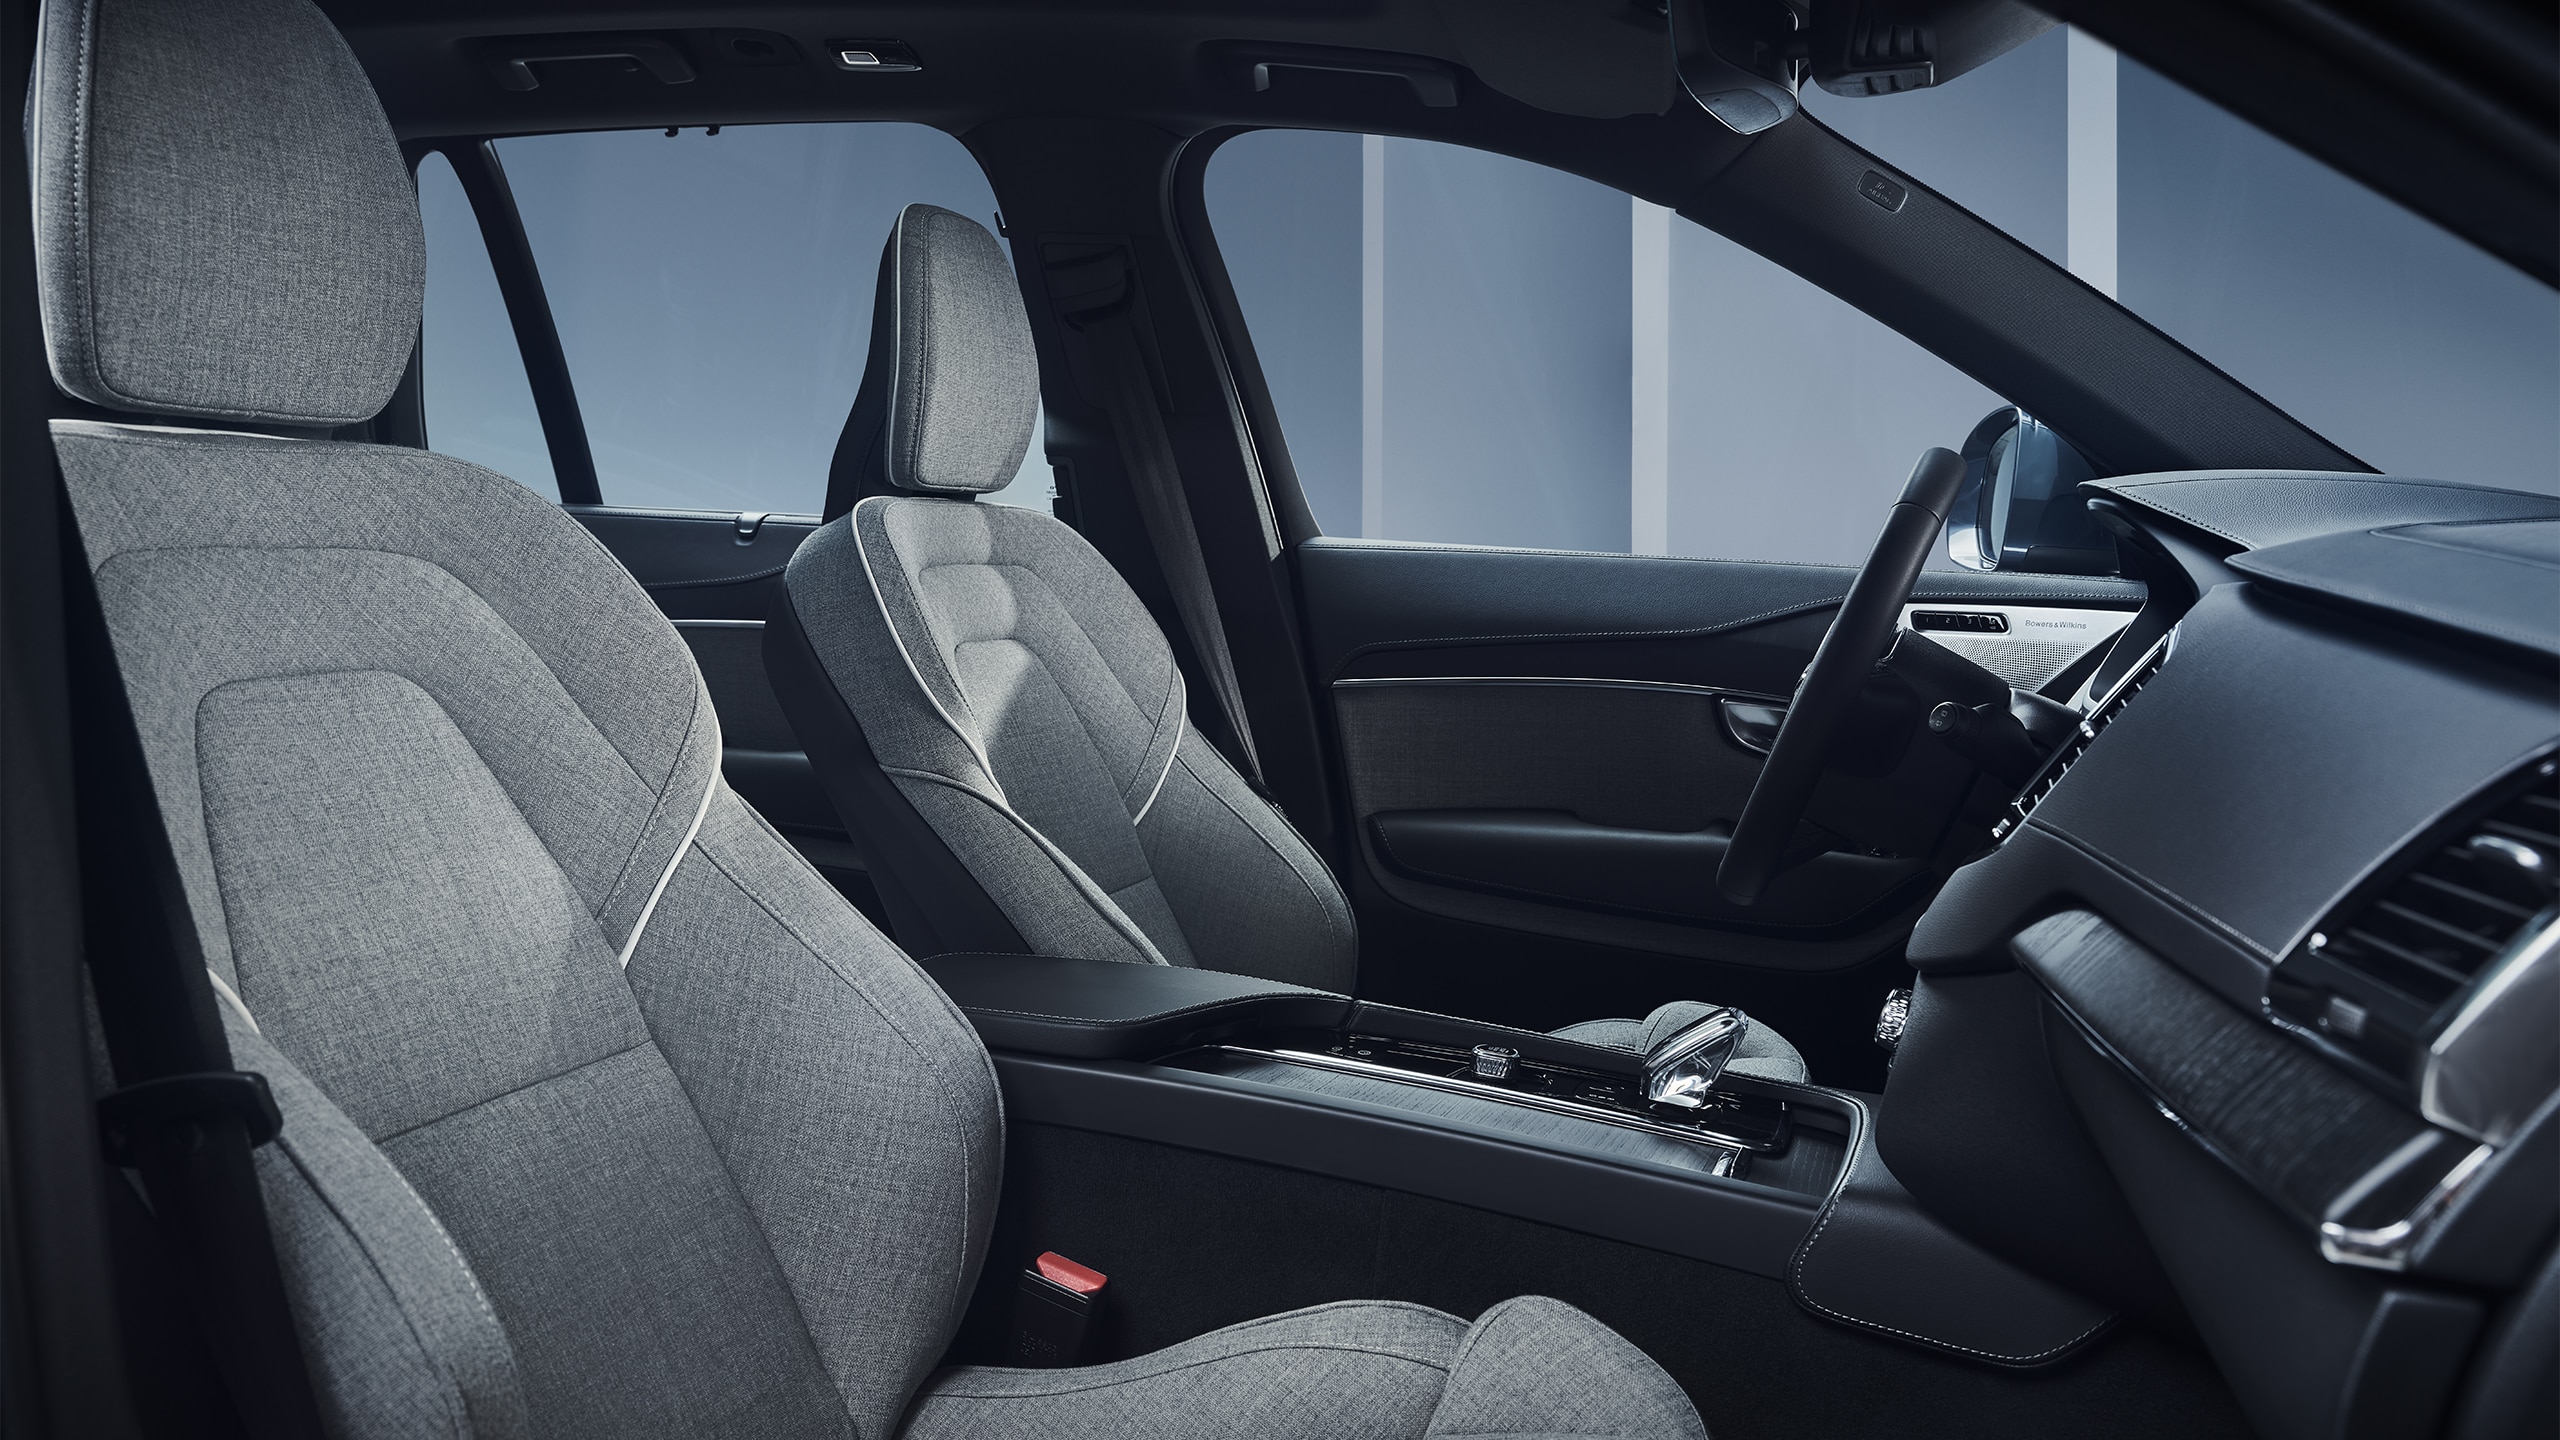 Nadzorna ploča, središnja konzola i prednja sjedala presvučena vunom u plug-in hibridu Volvo XC90 Recharge.